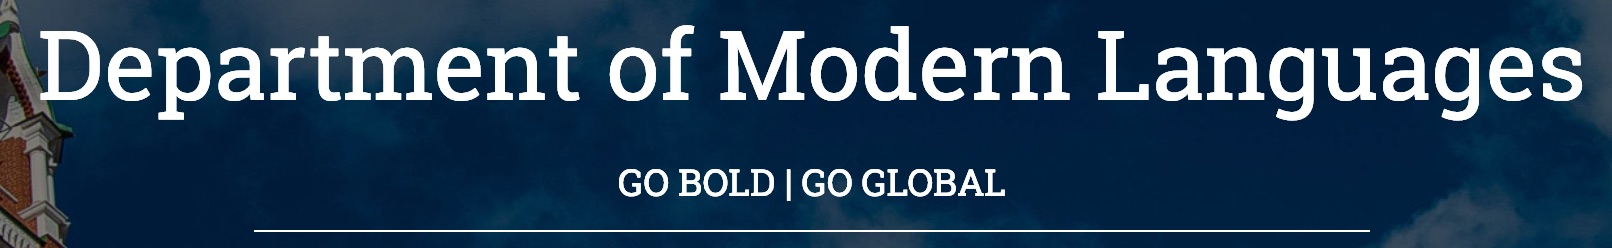 MODL Go bold Go global banner.jpg